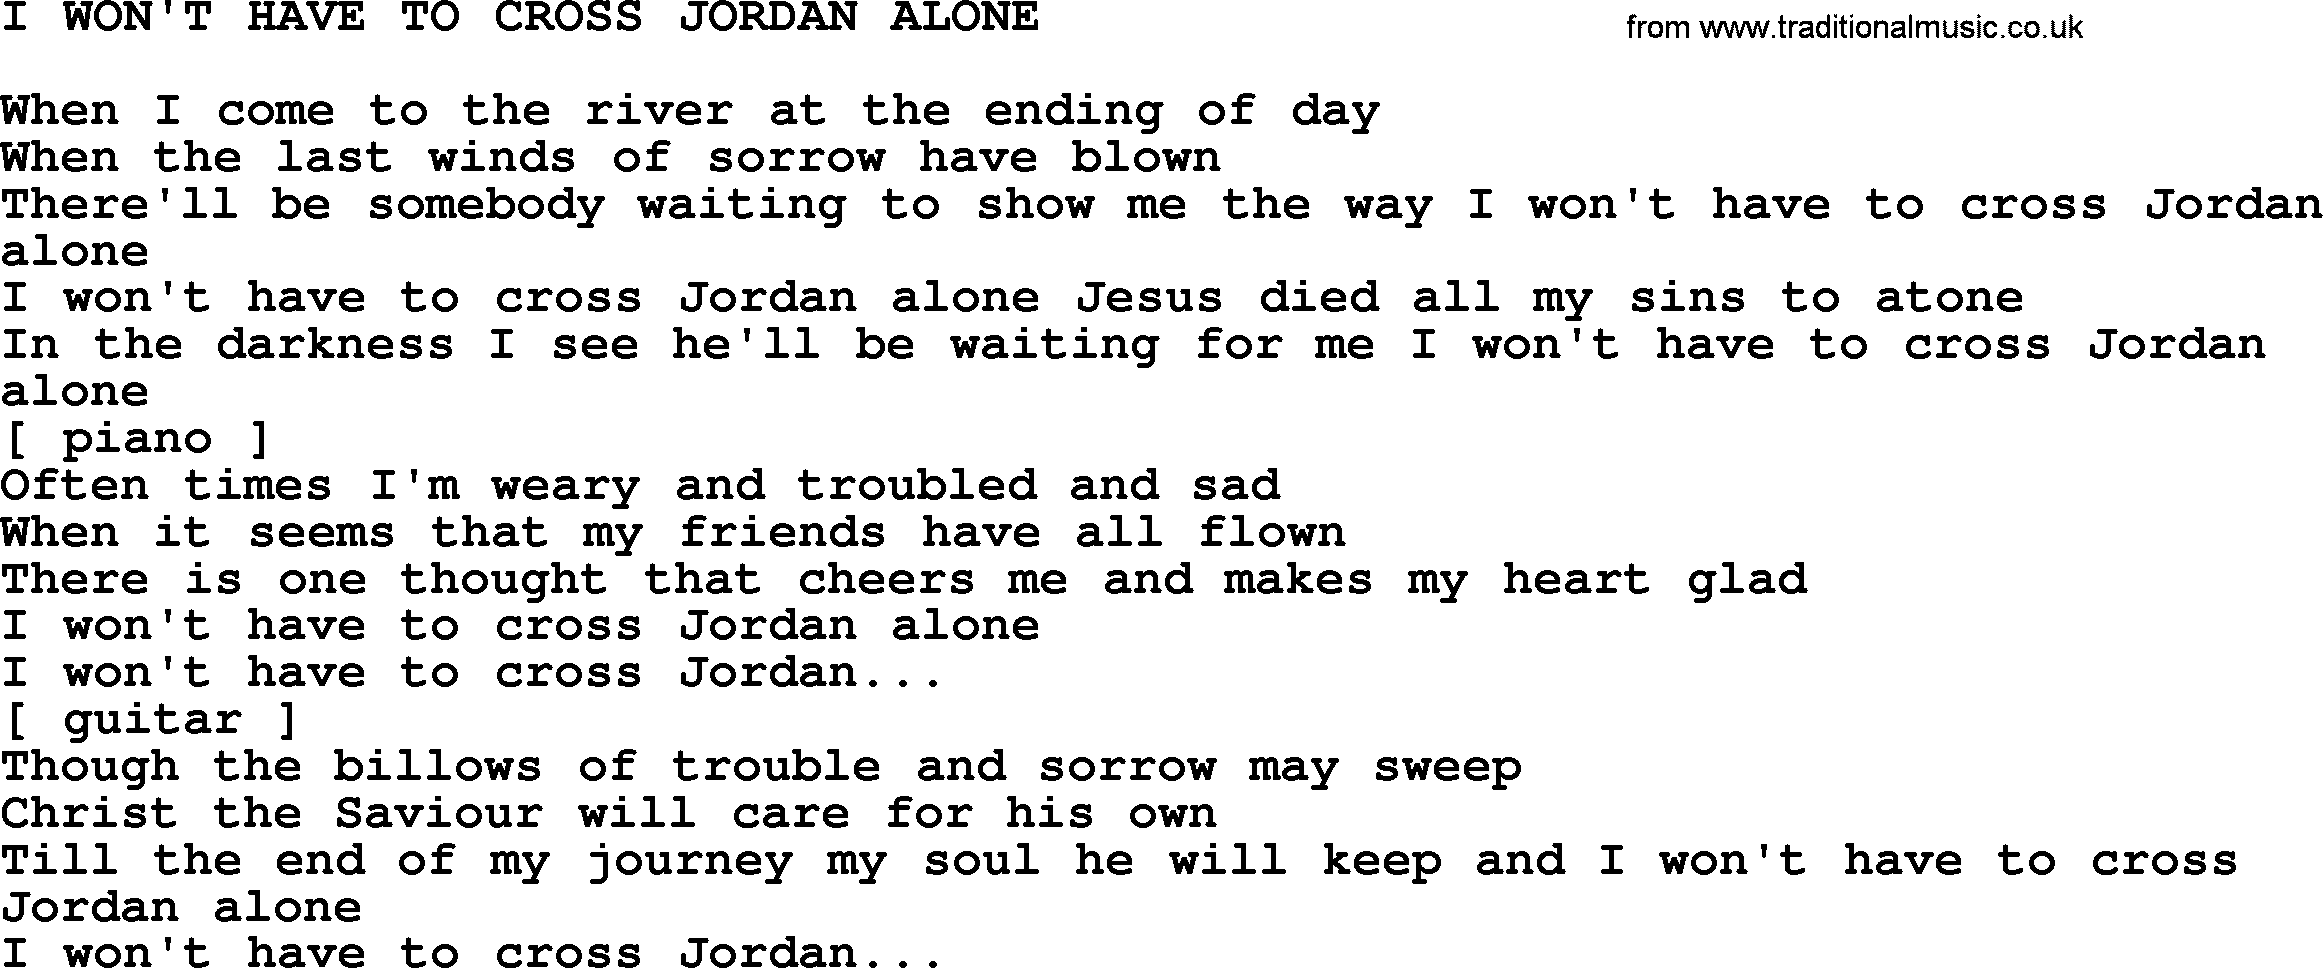 Johnny Cash song I Won't Have To Cross Jordan Alone.txt lyrics